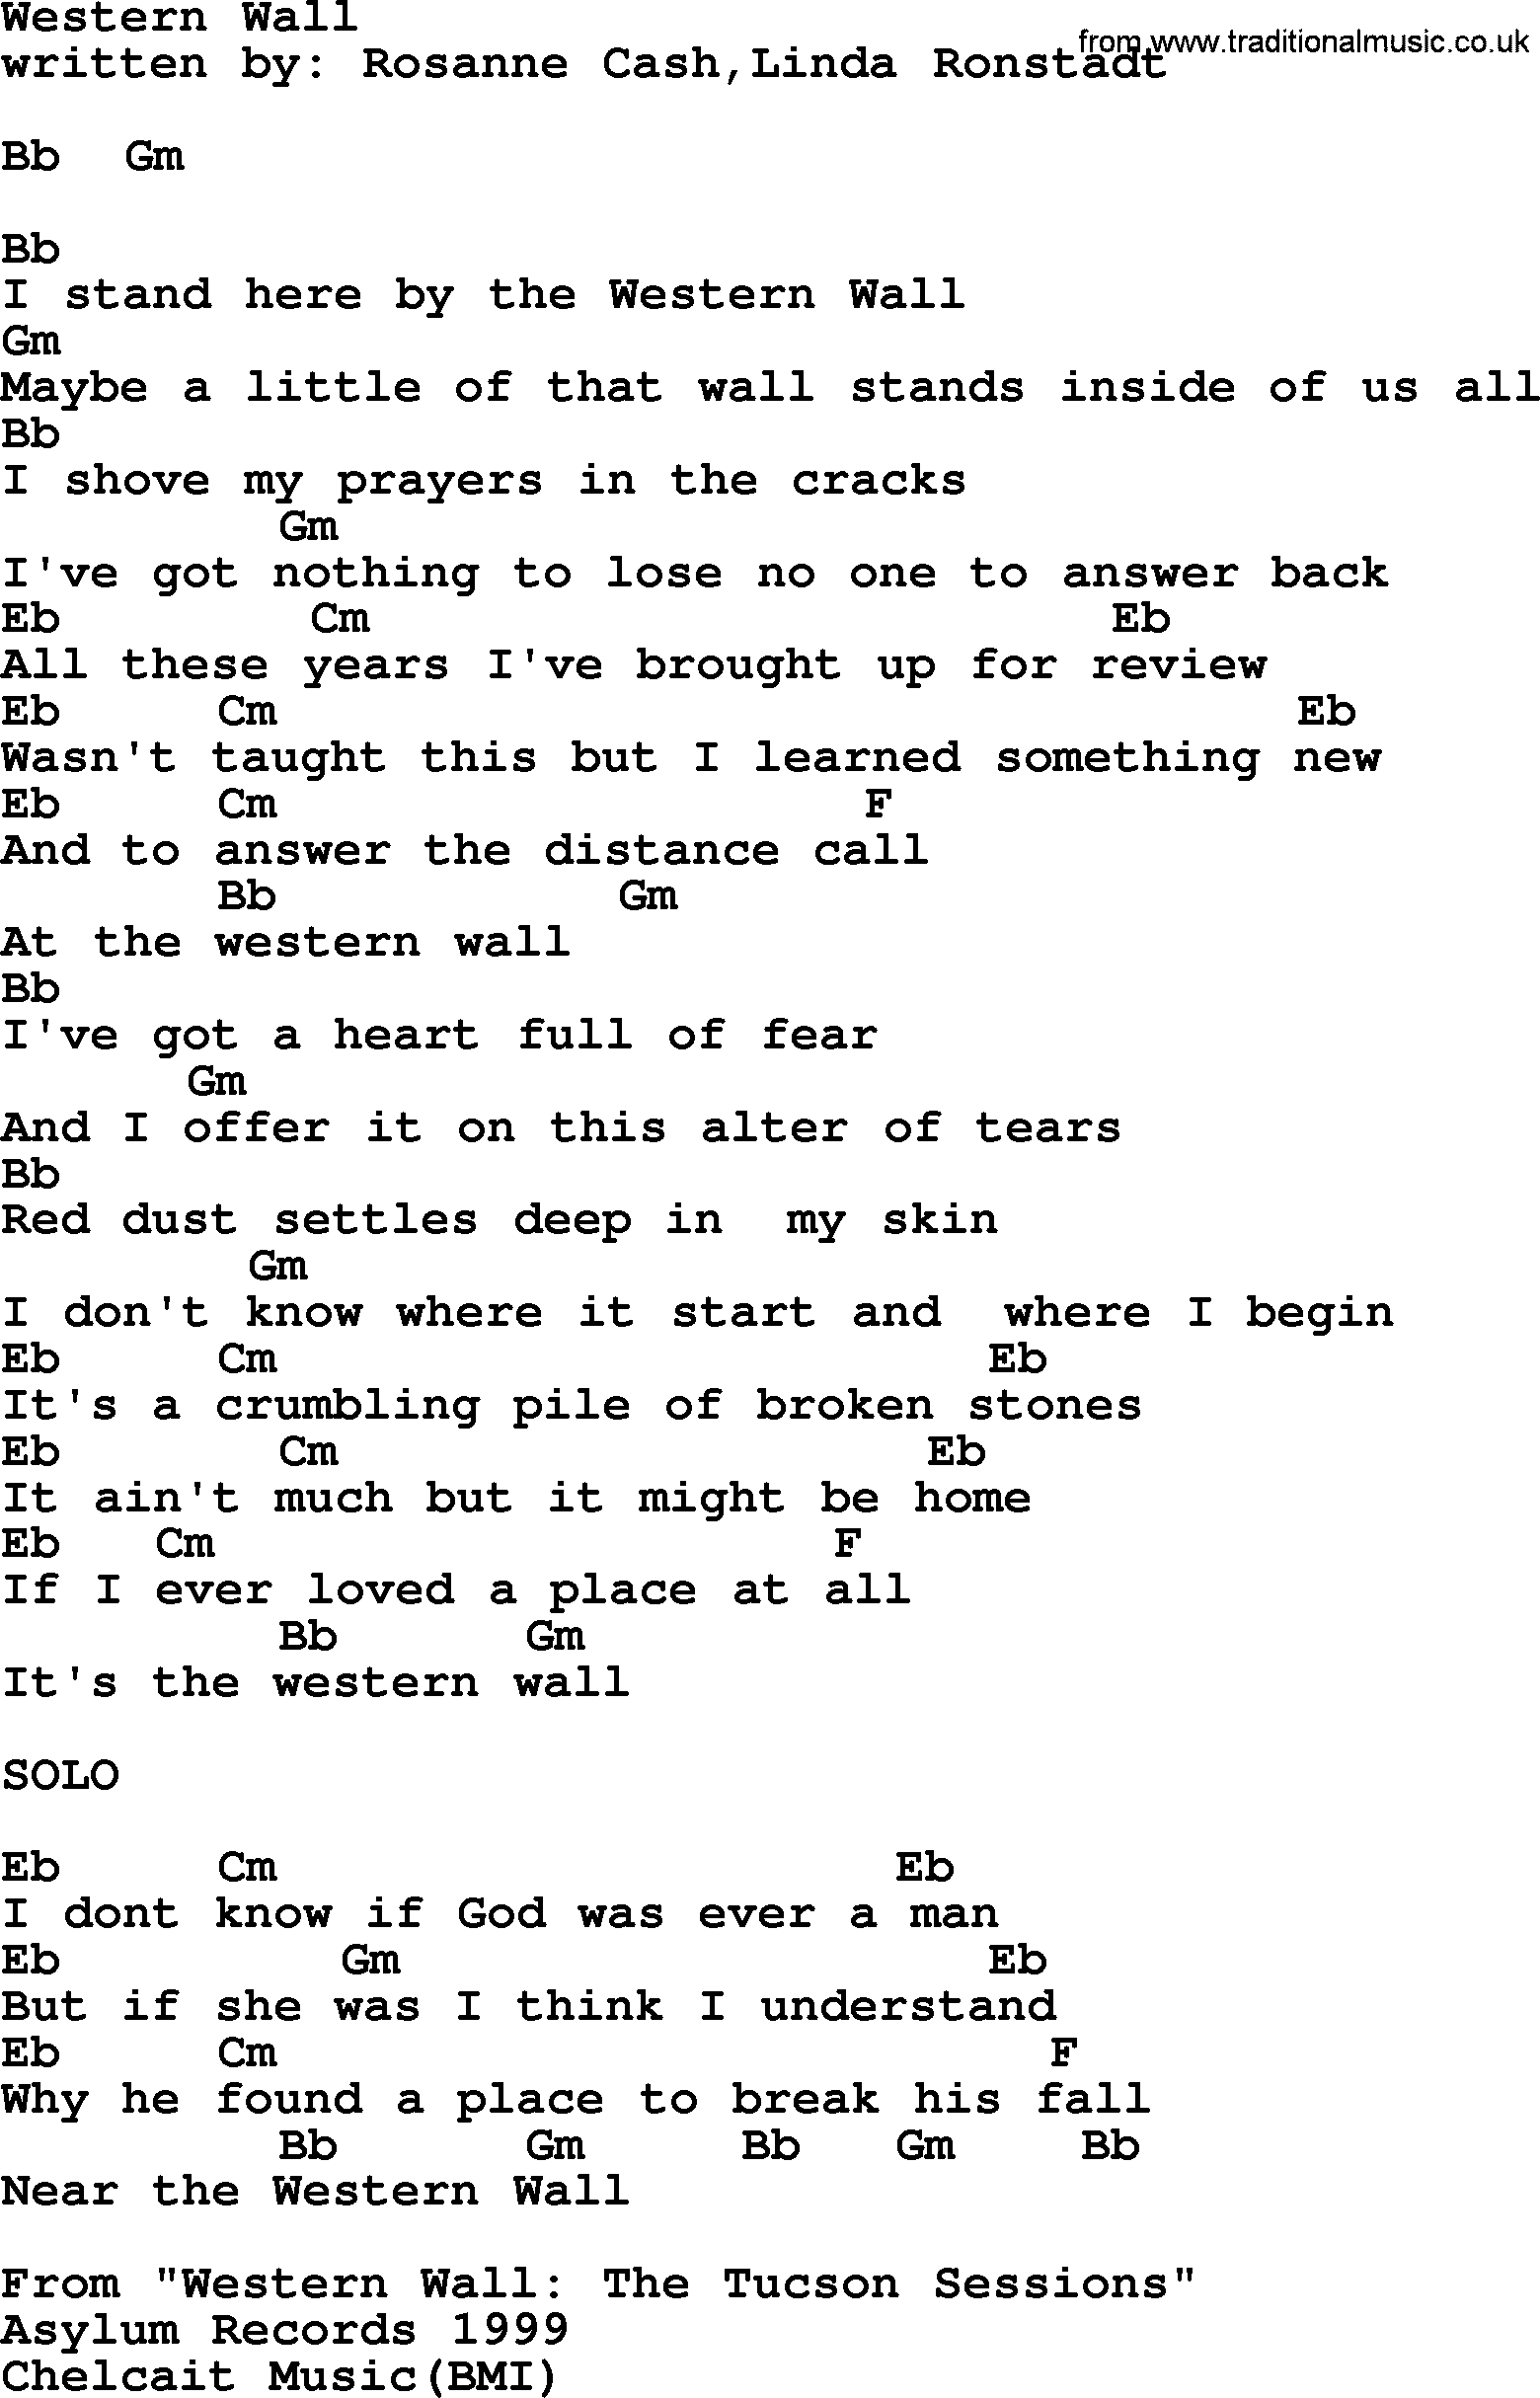 Emmylou Harris song: Western Wall lyrics and chords